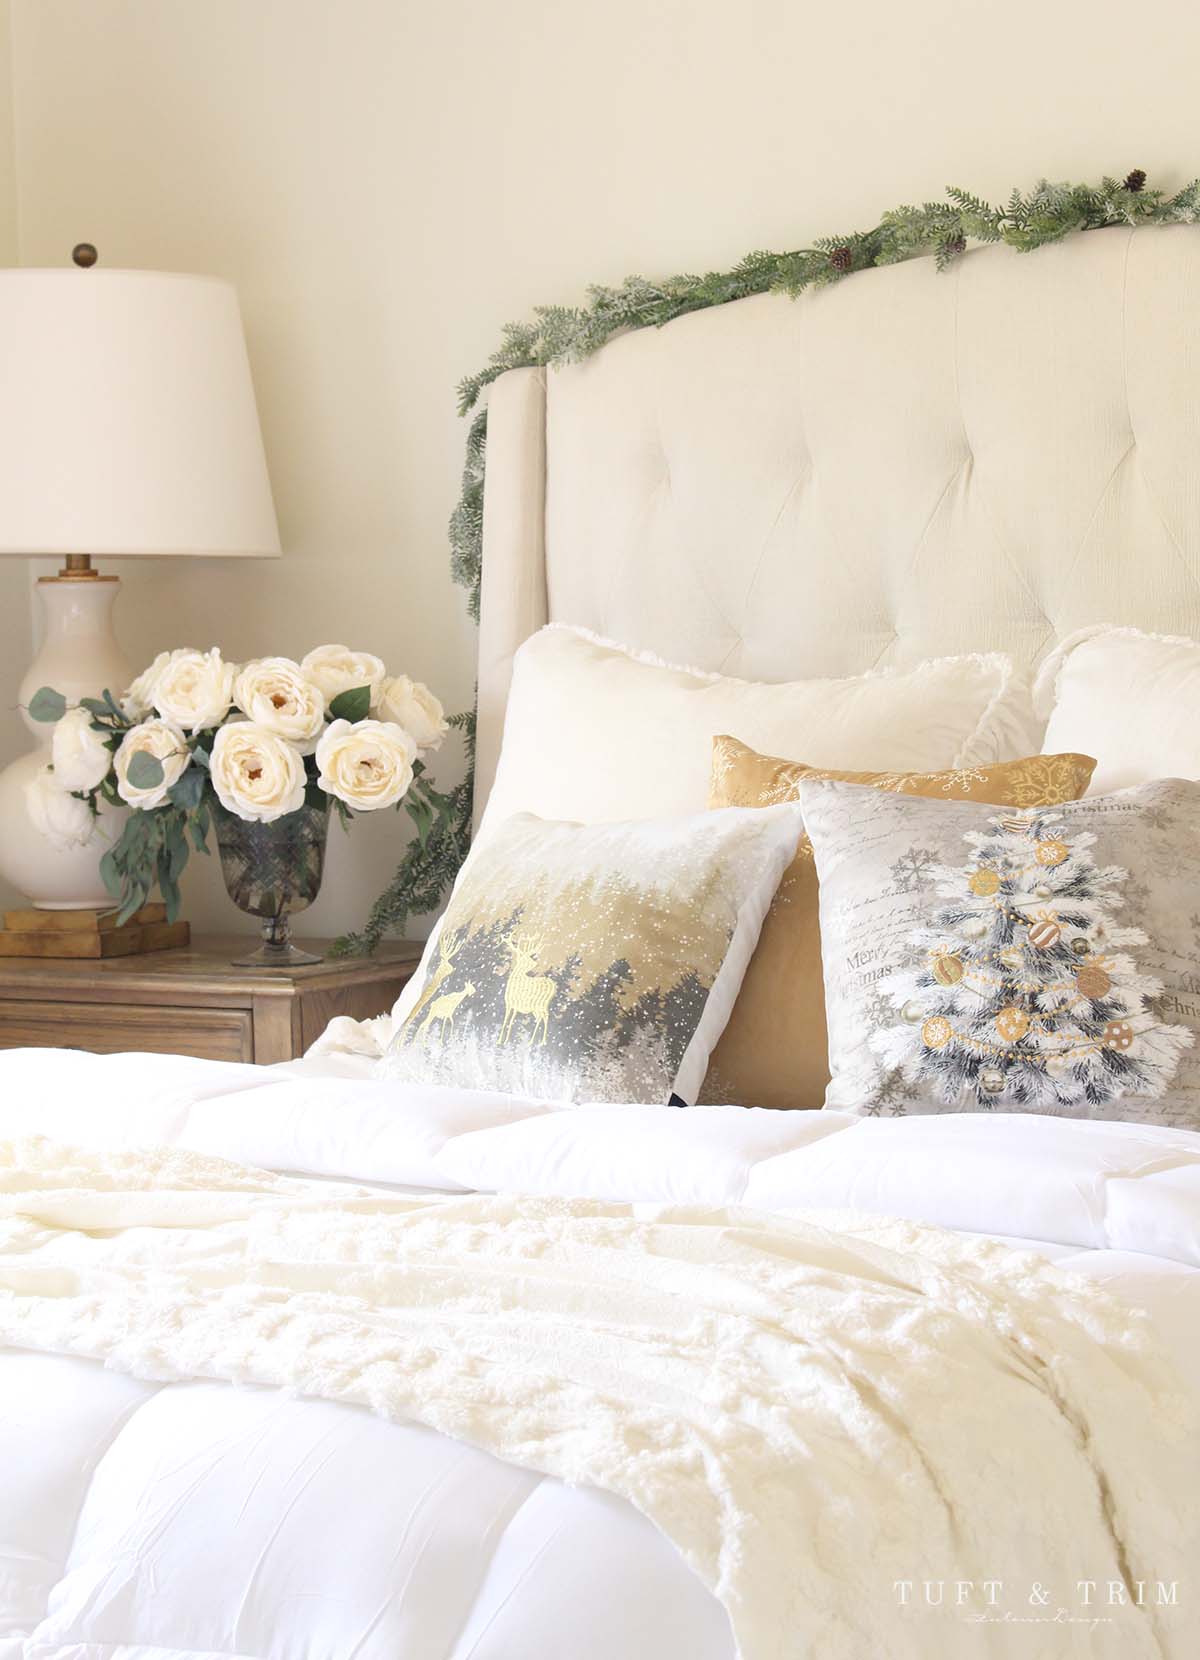 Cozy Holiday Guest Bedroom Essentials with Tuft & Trim Interior Design